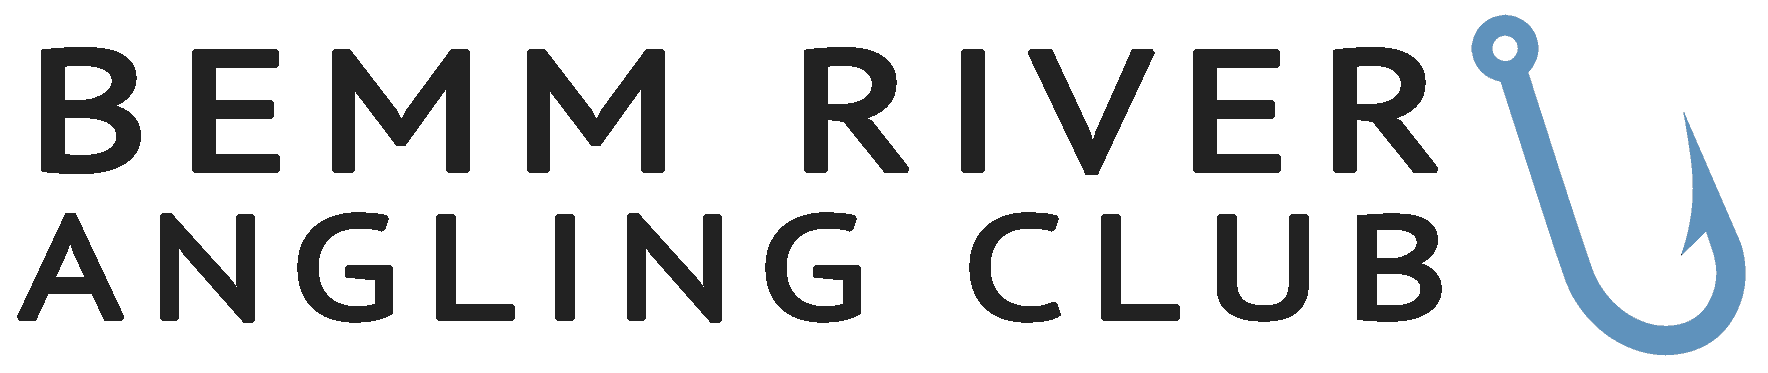 Bemm River Angling Club